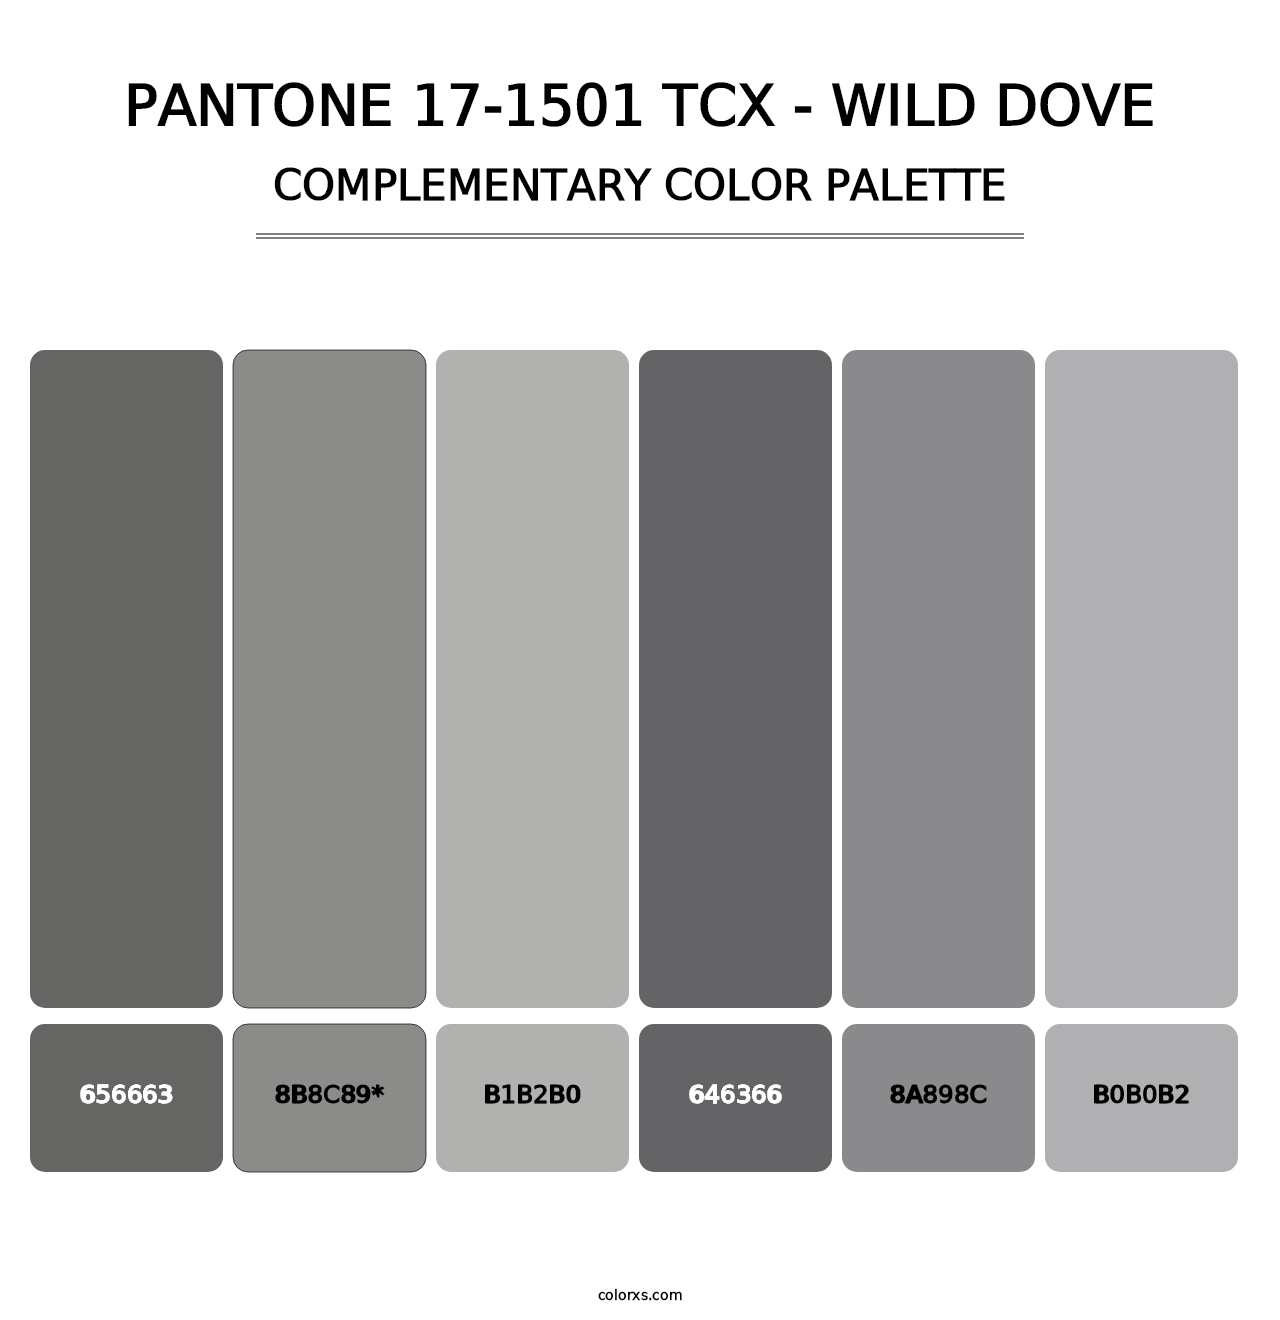 PANTONE 17-1501 TCX - Wild Dove - Complementary Color Palette